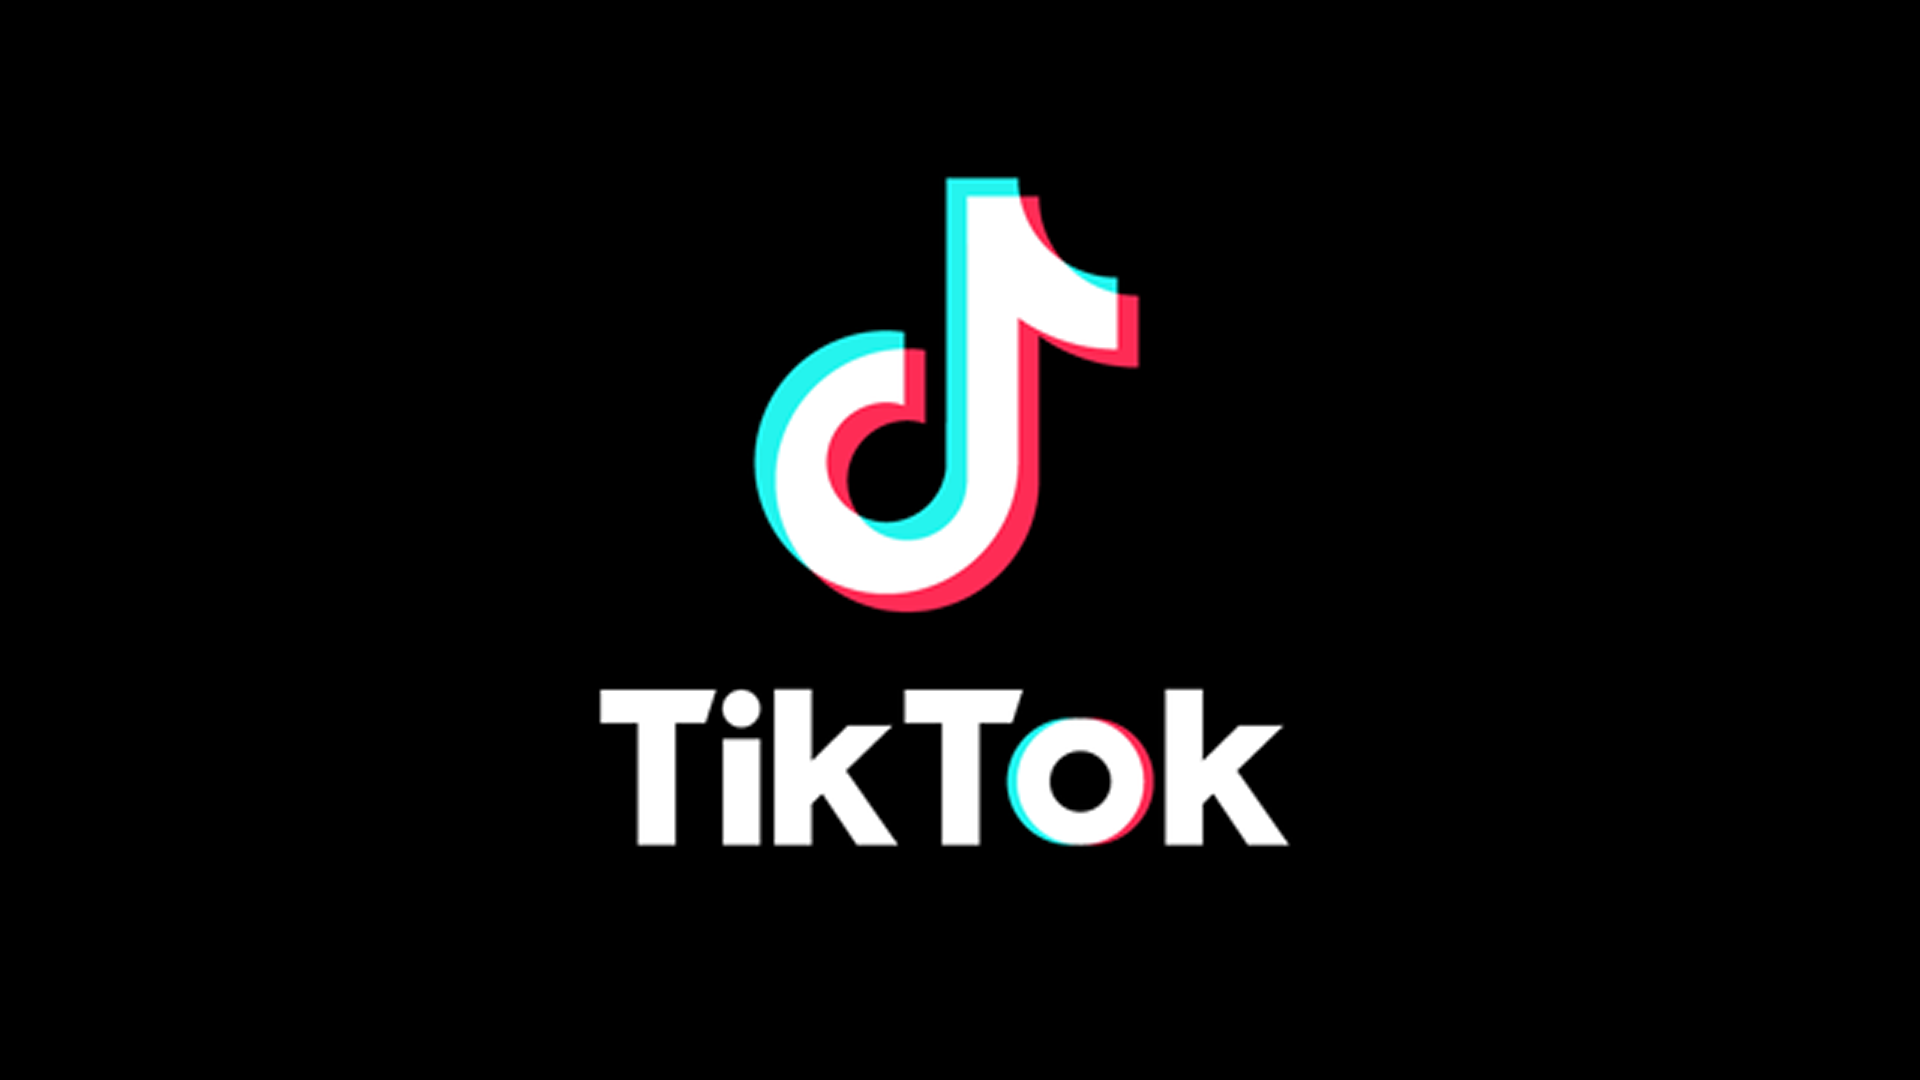 TikTok this sound isn't available